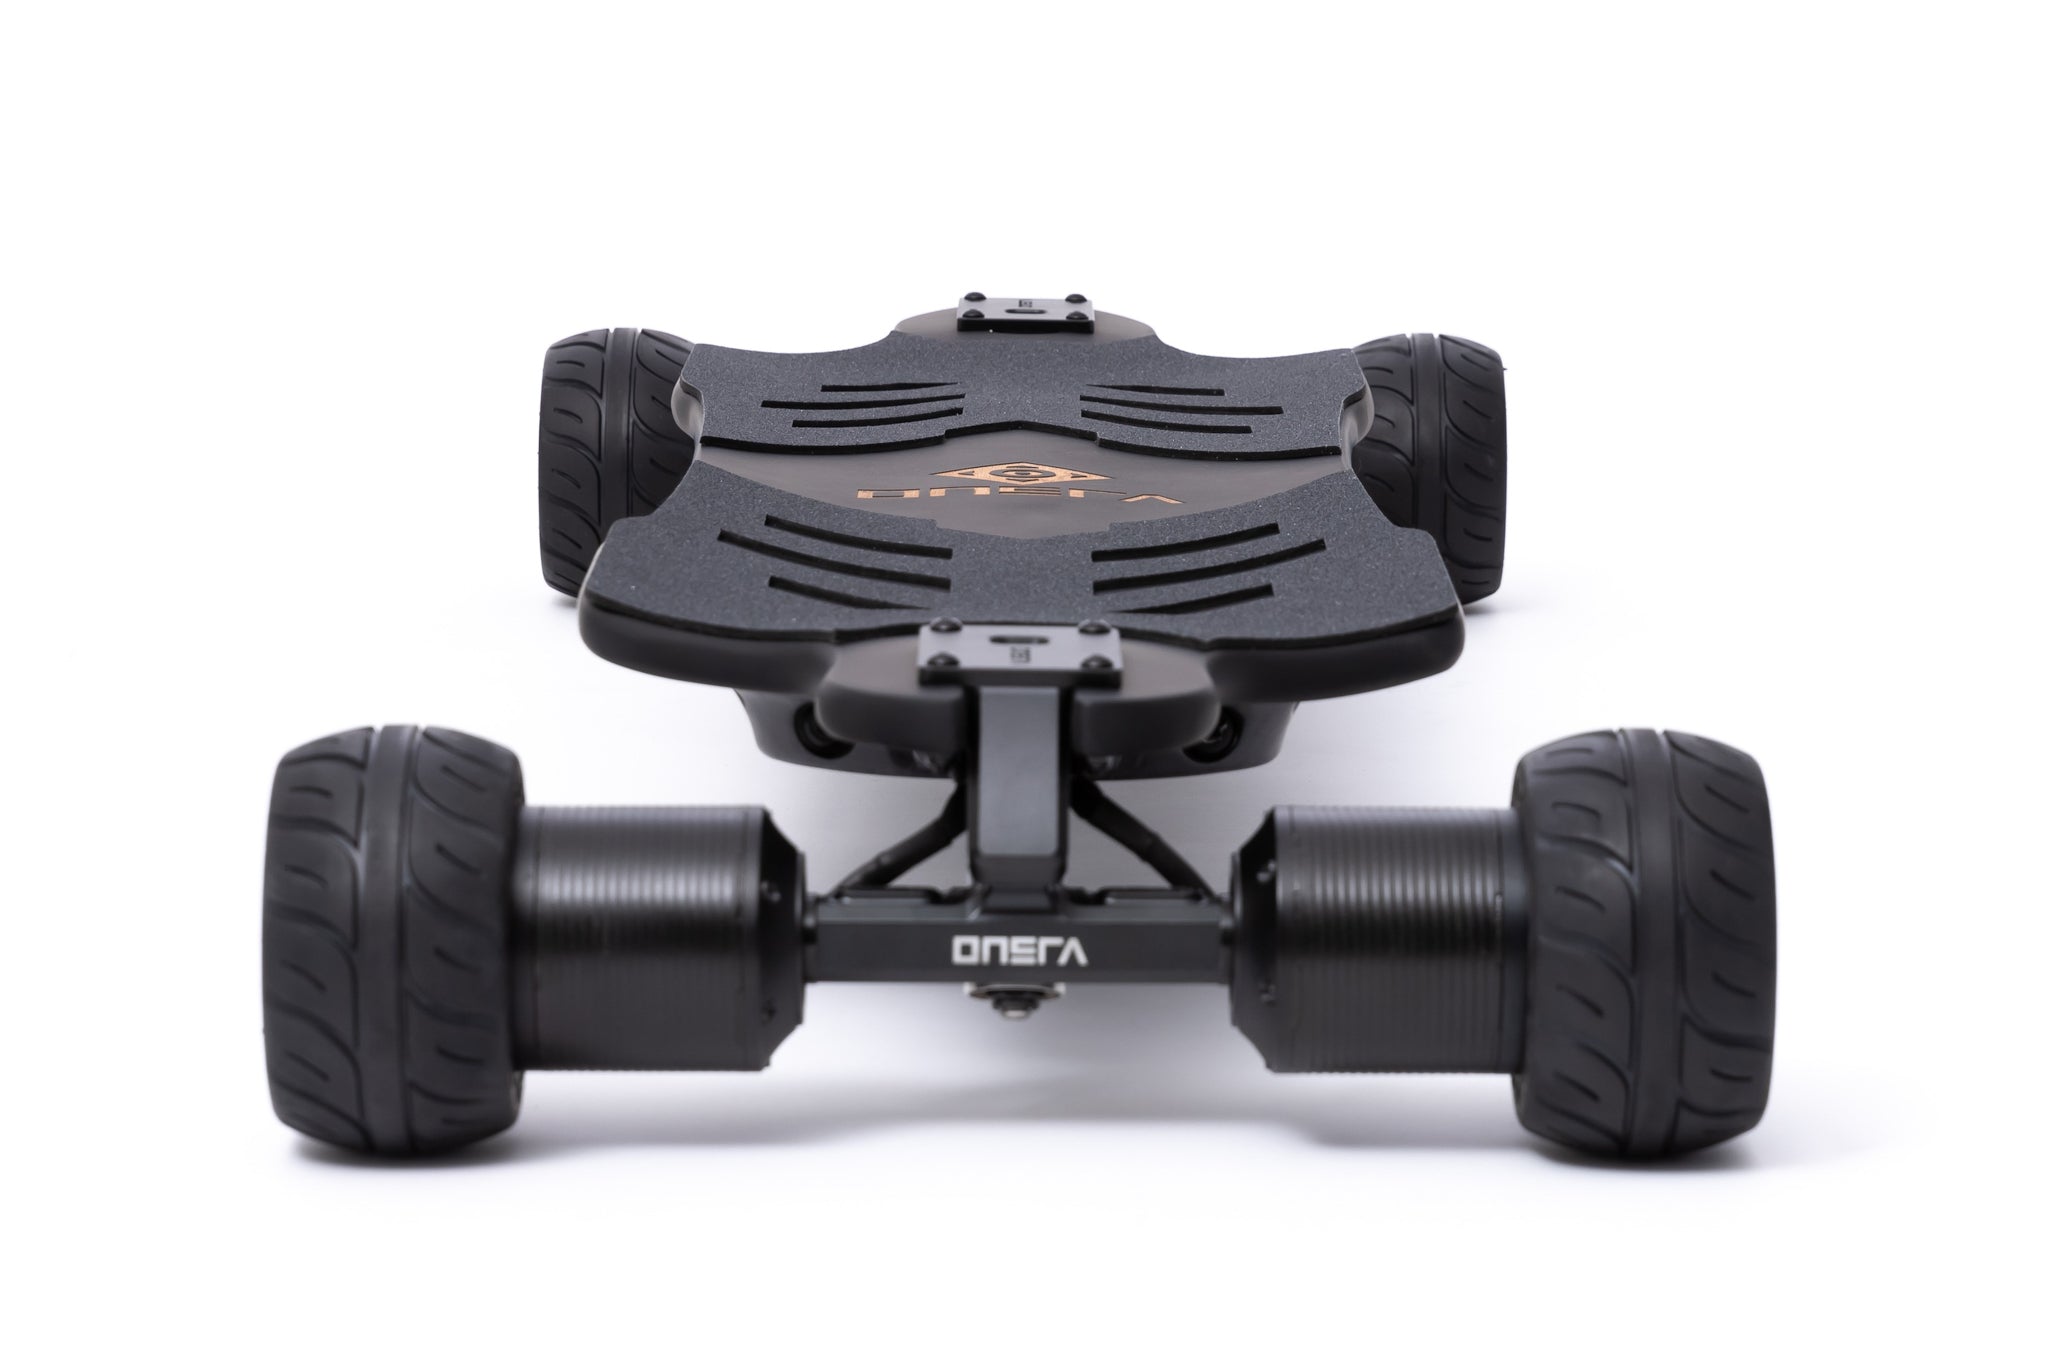 ONSRA Black Carve 3 PRO electric skateboard – Innovative, Lightweight, High-performance